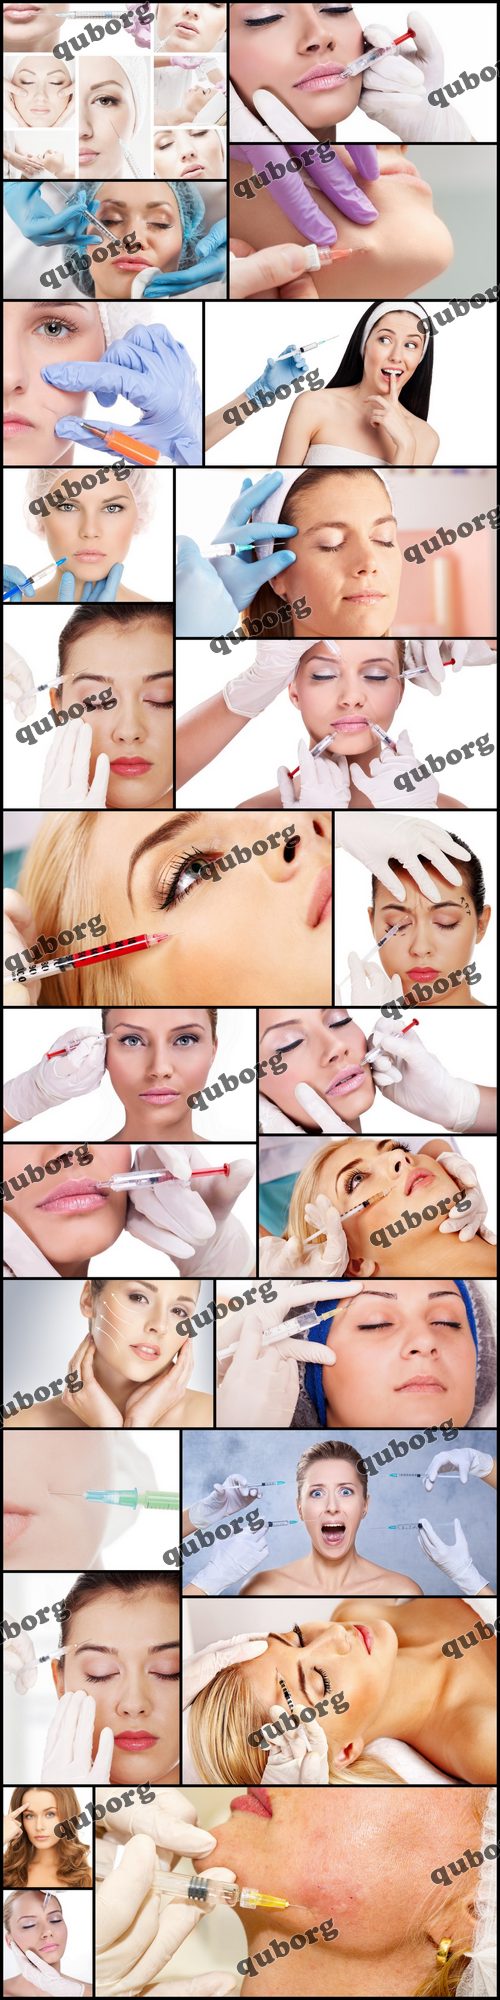 Stock Photos - Treatment with Botox